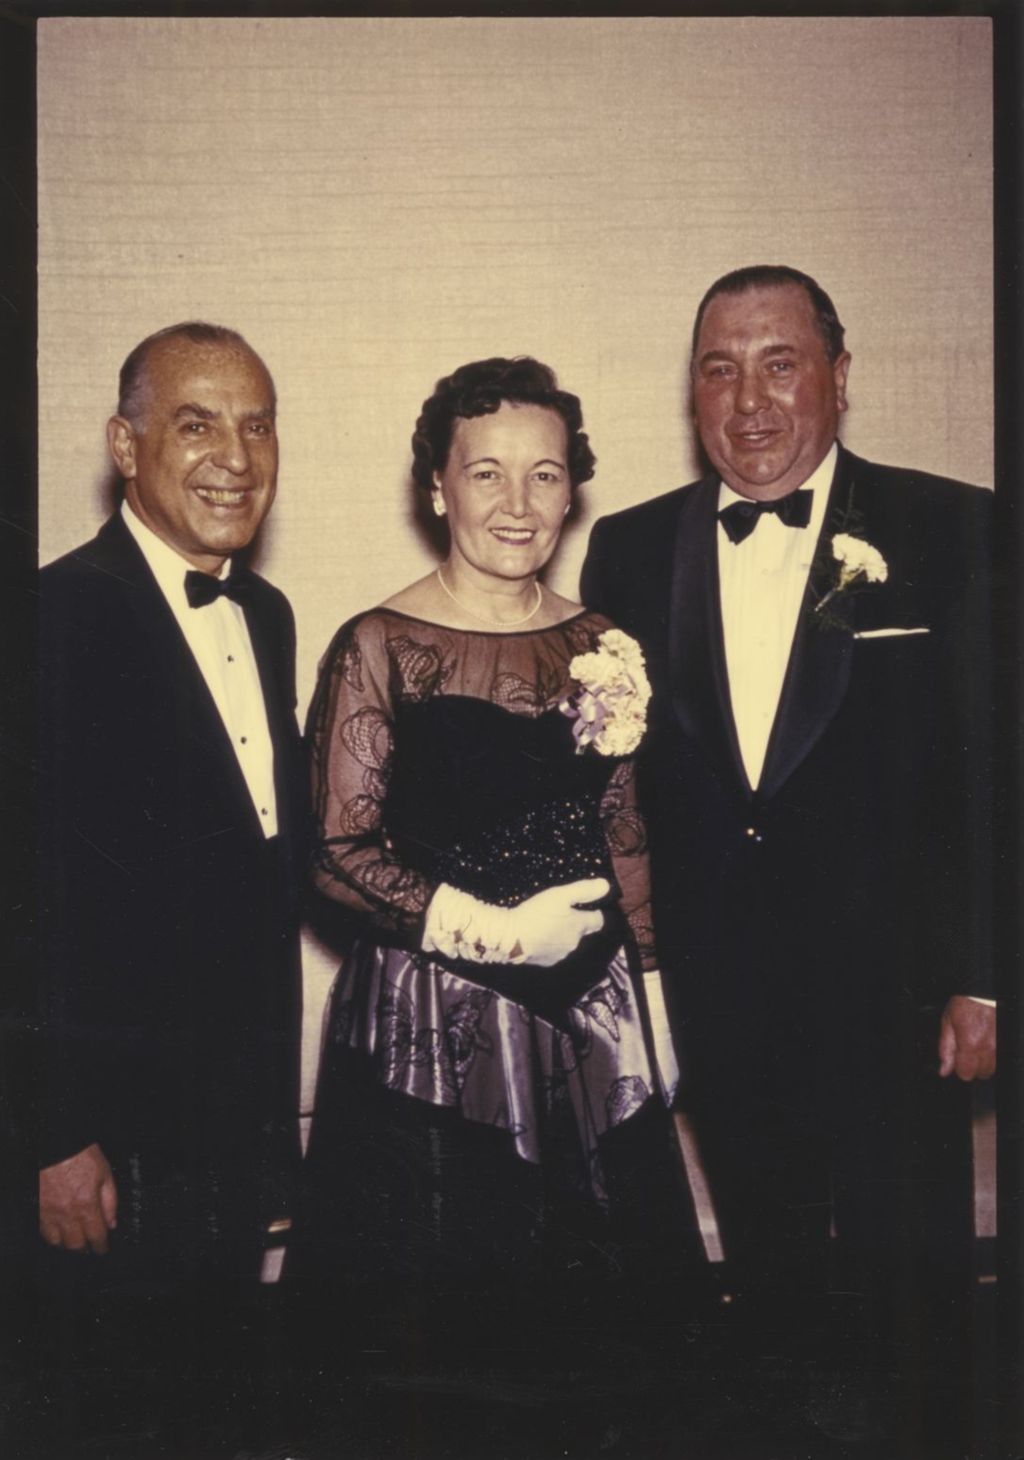 Richard J. and Eleanor Daley with Judge Marovitz